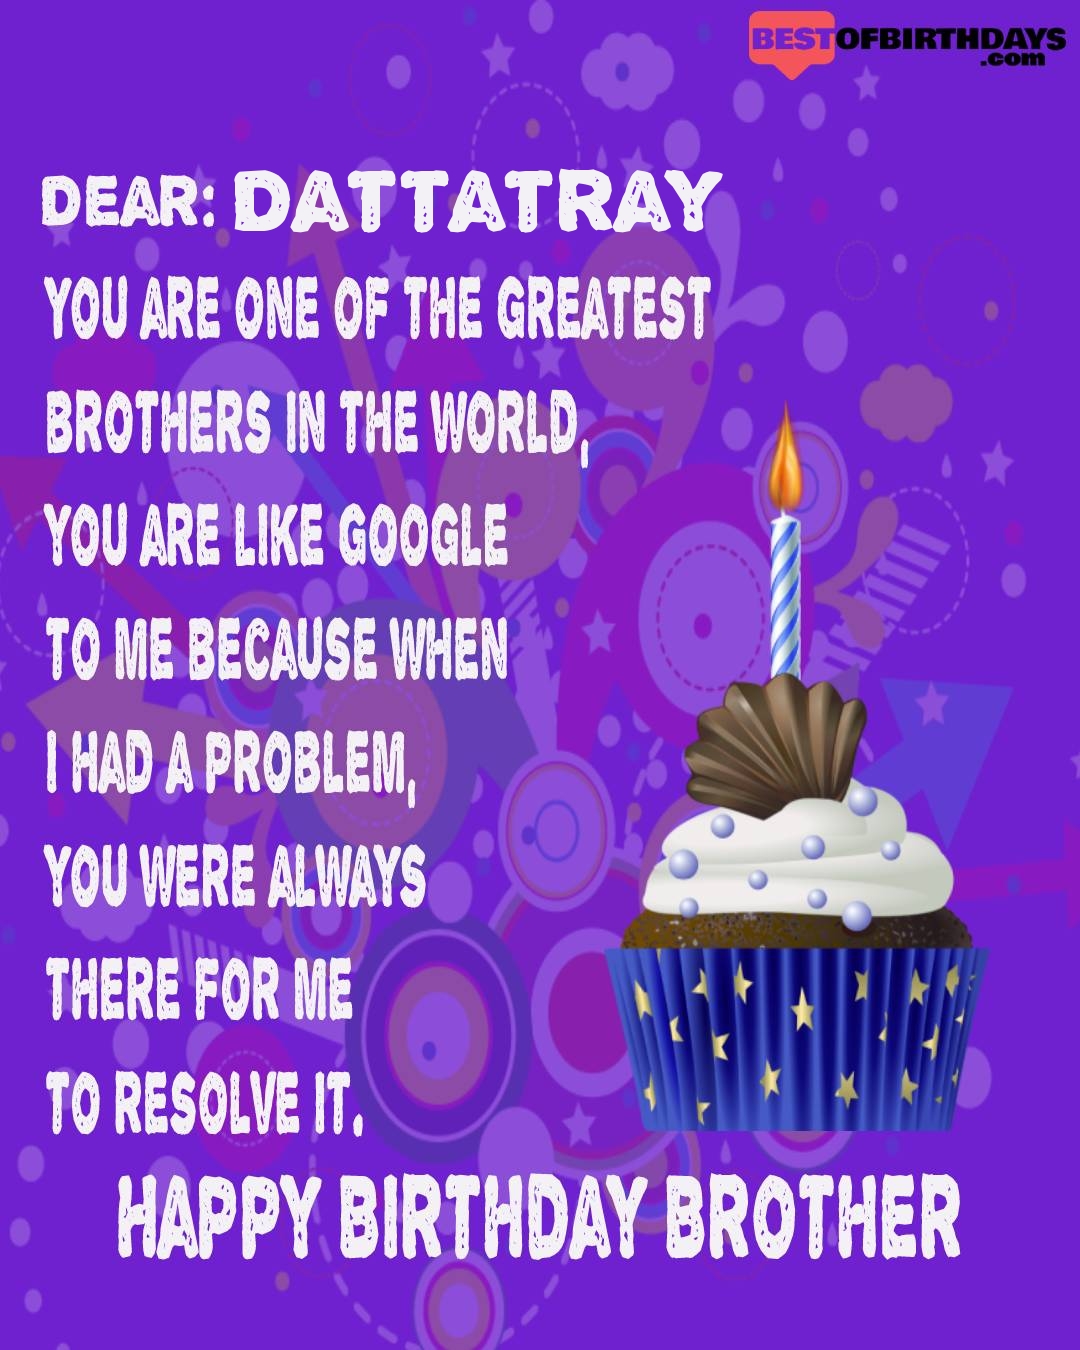 Happy birthday dattatray bhai brother bro